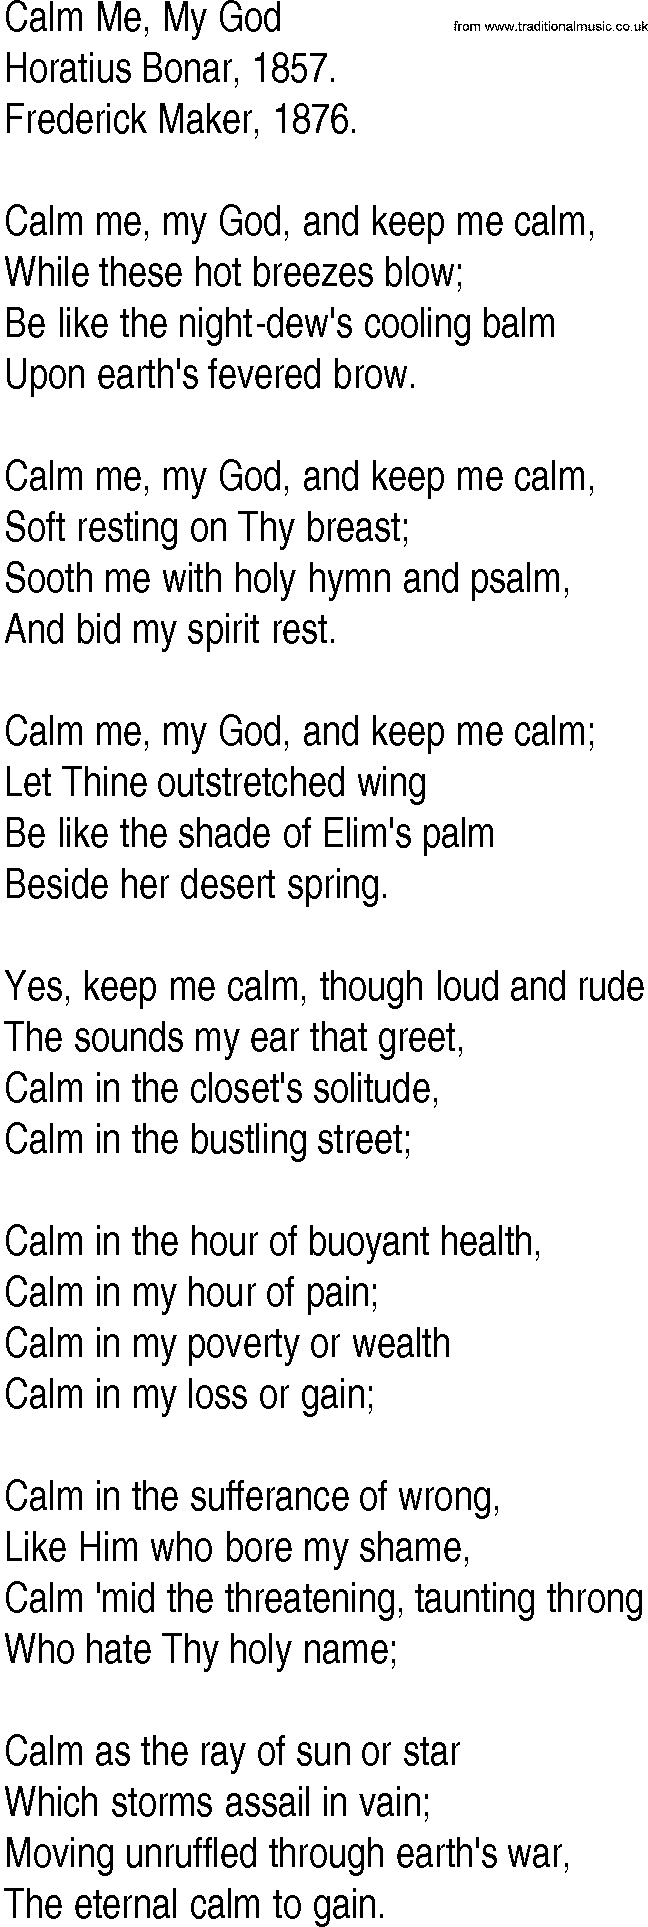 Hymn and Gospel Song: Calm Me, My God by Horatius Bonar lyrics